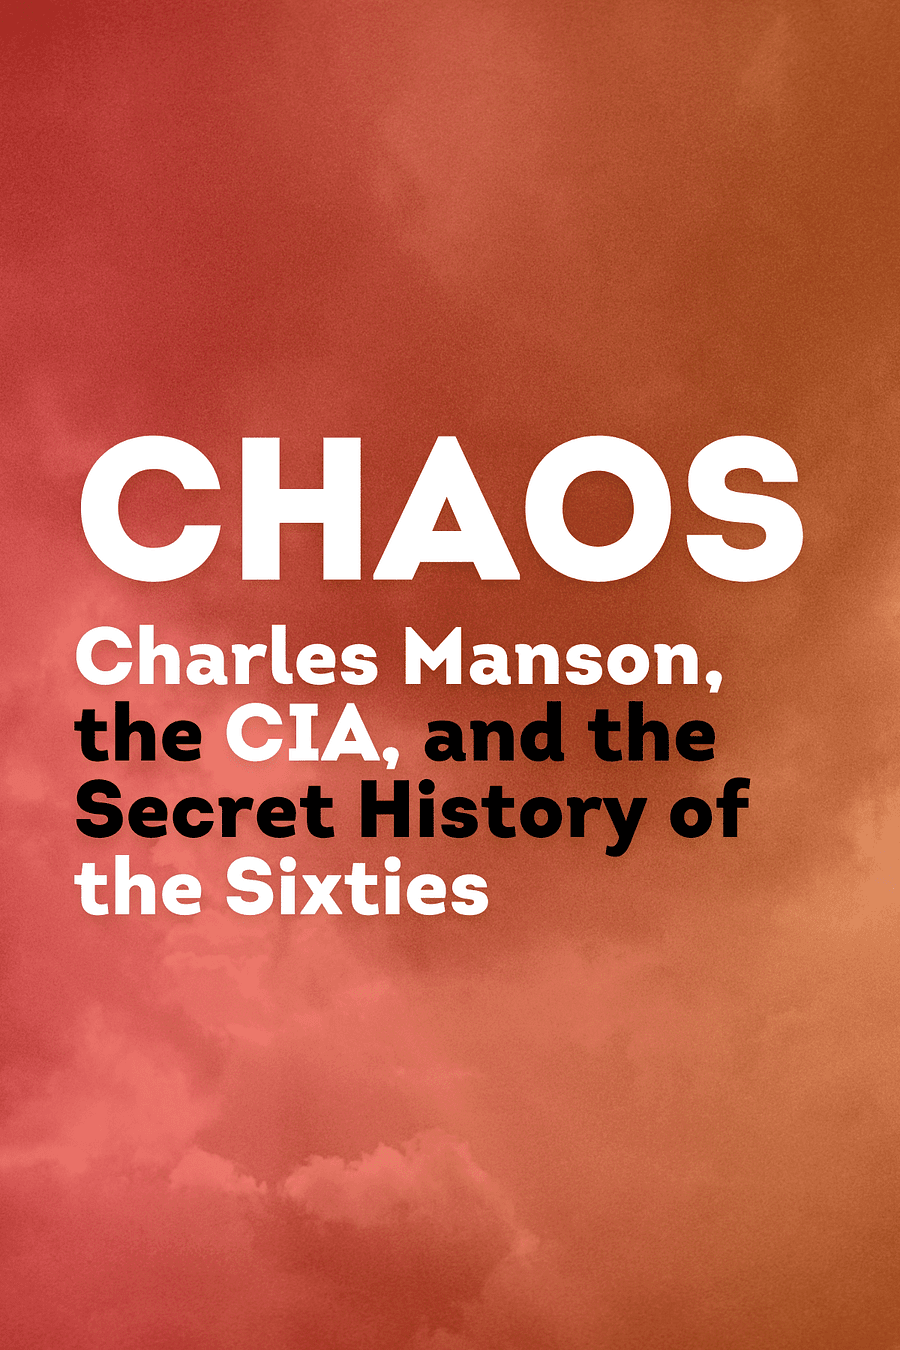 Chaos by Tom O'Neill - Book Summary